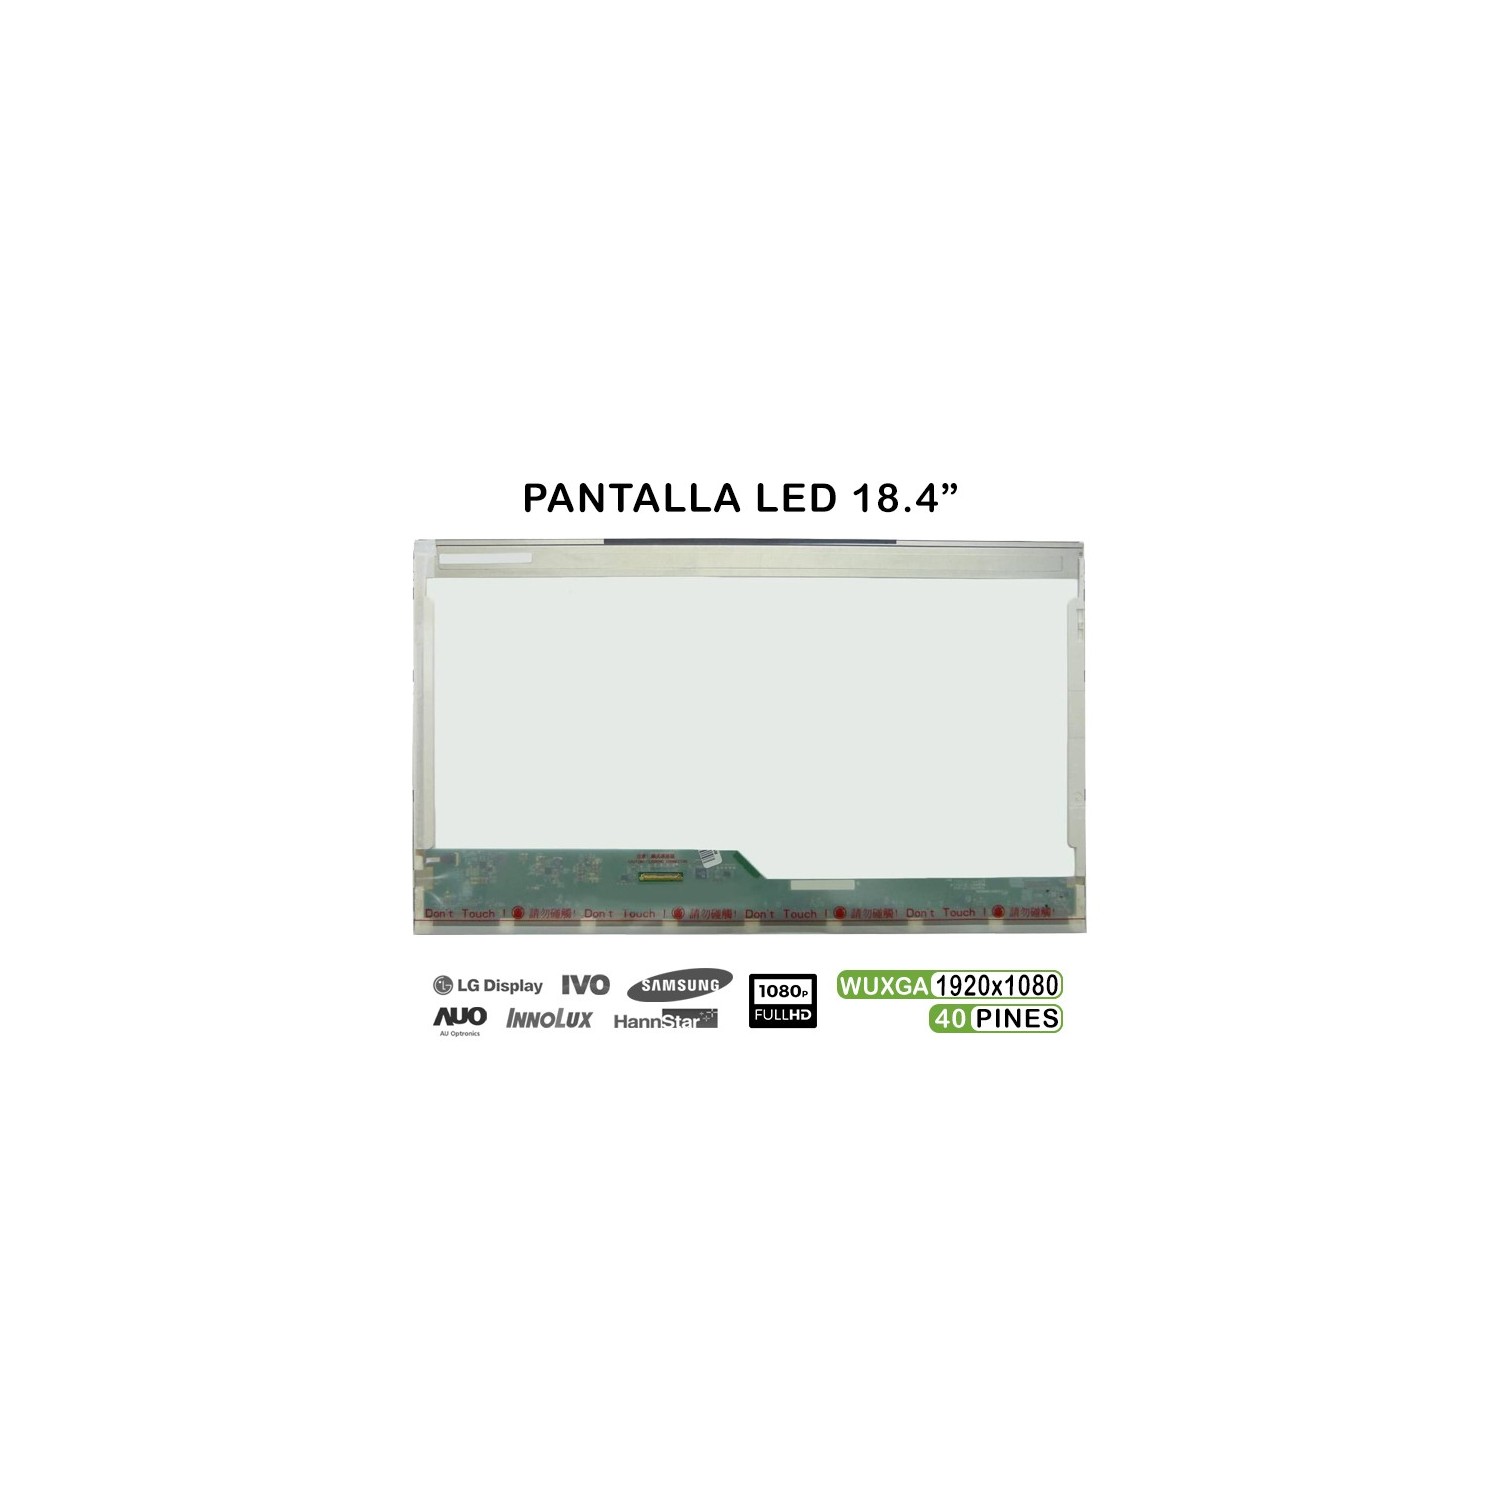 PANTALLA PORTÁTIL LED 15.6 PULGADAS LP156WH4